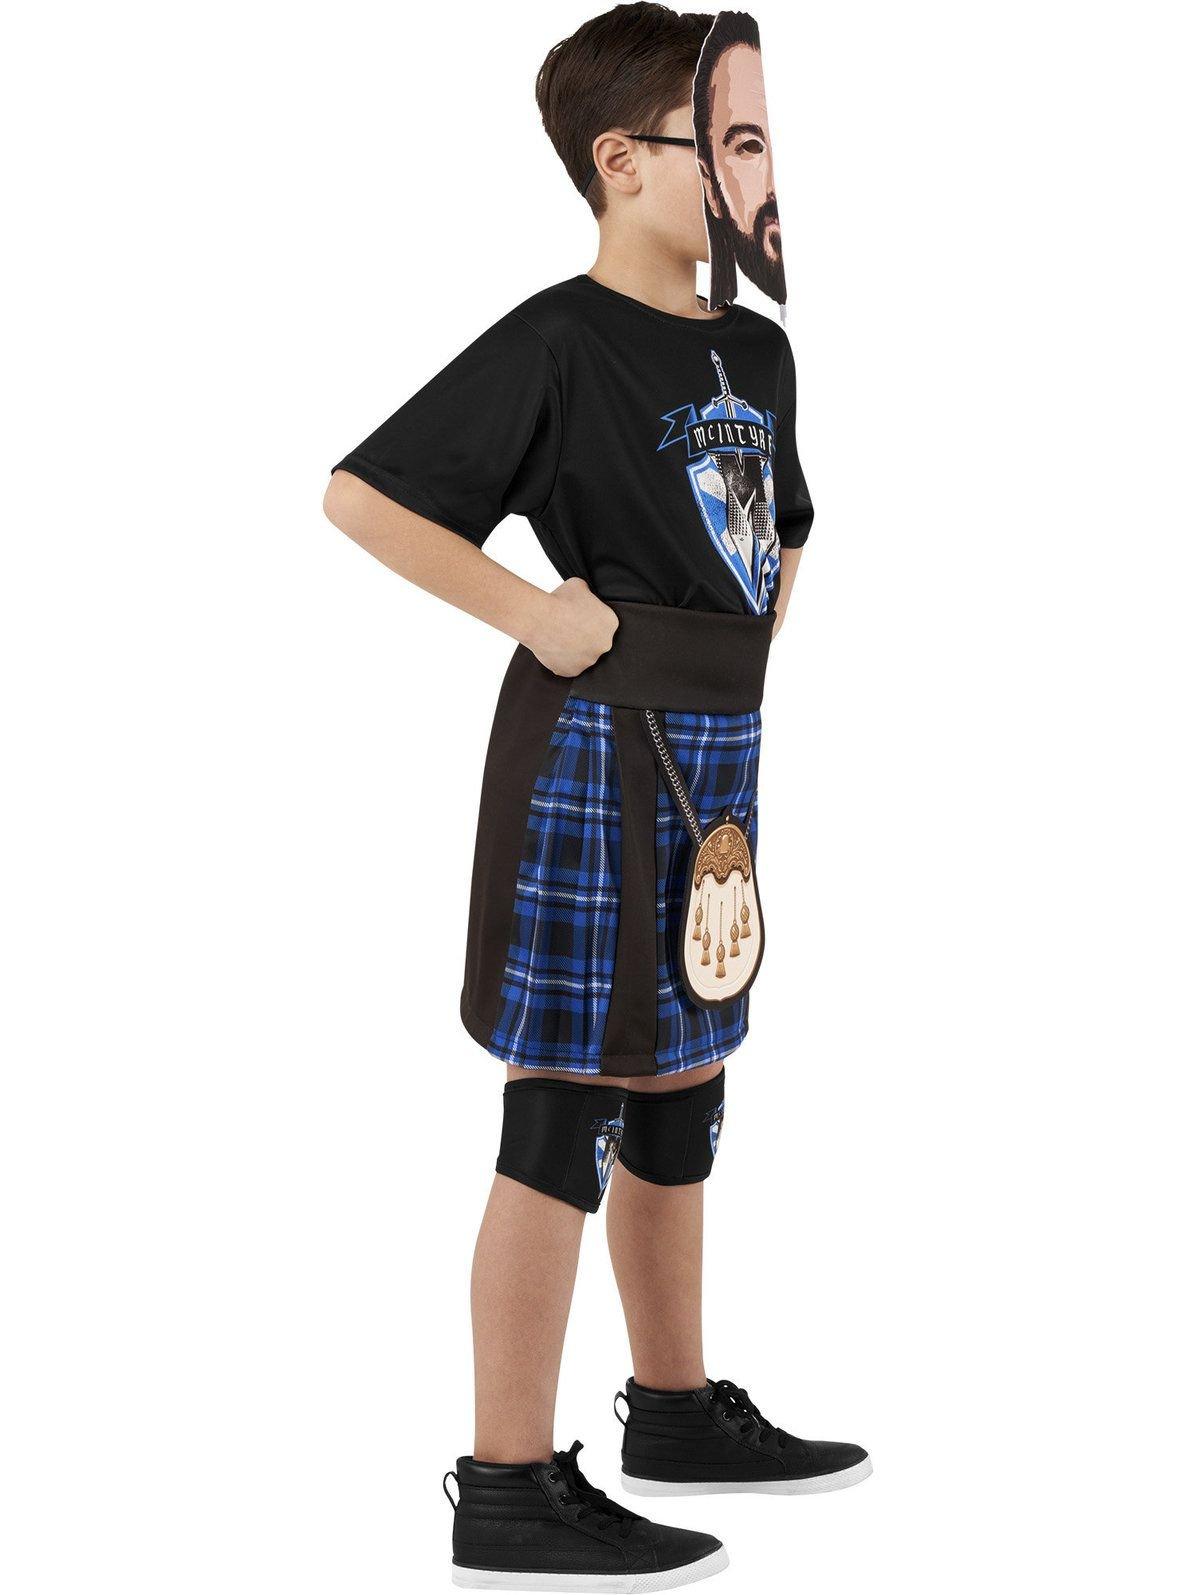 WWE Drew McIntyre Child Costume